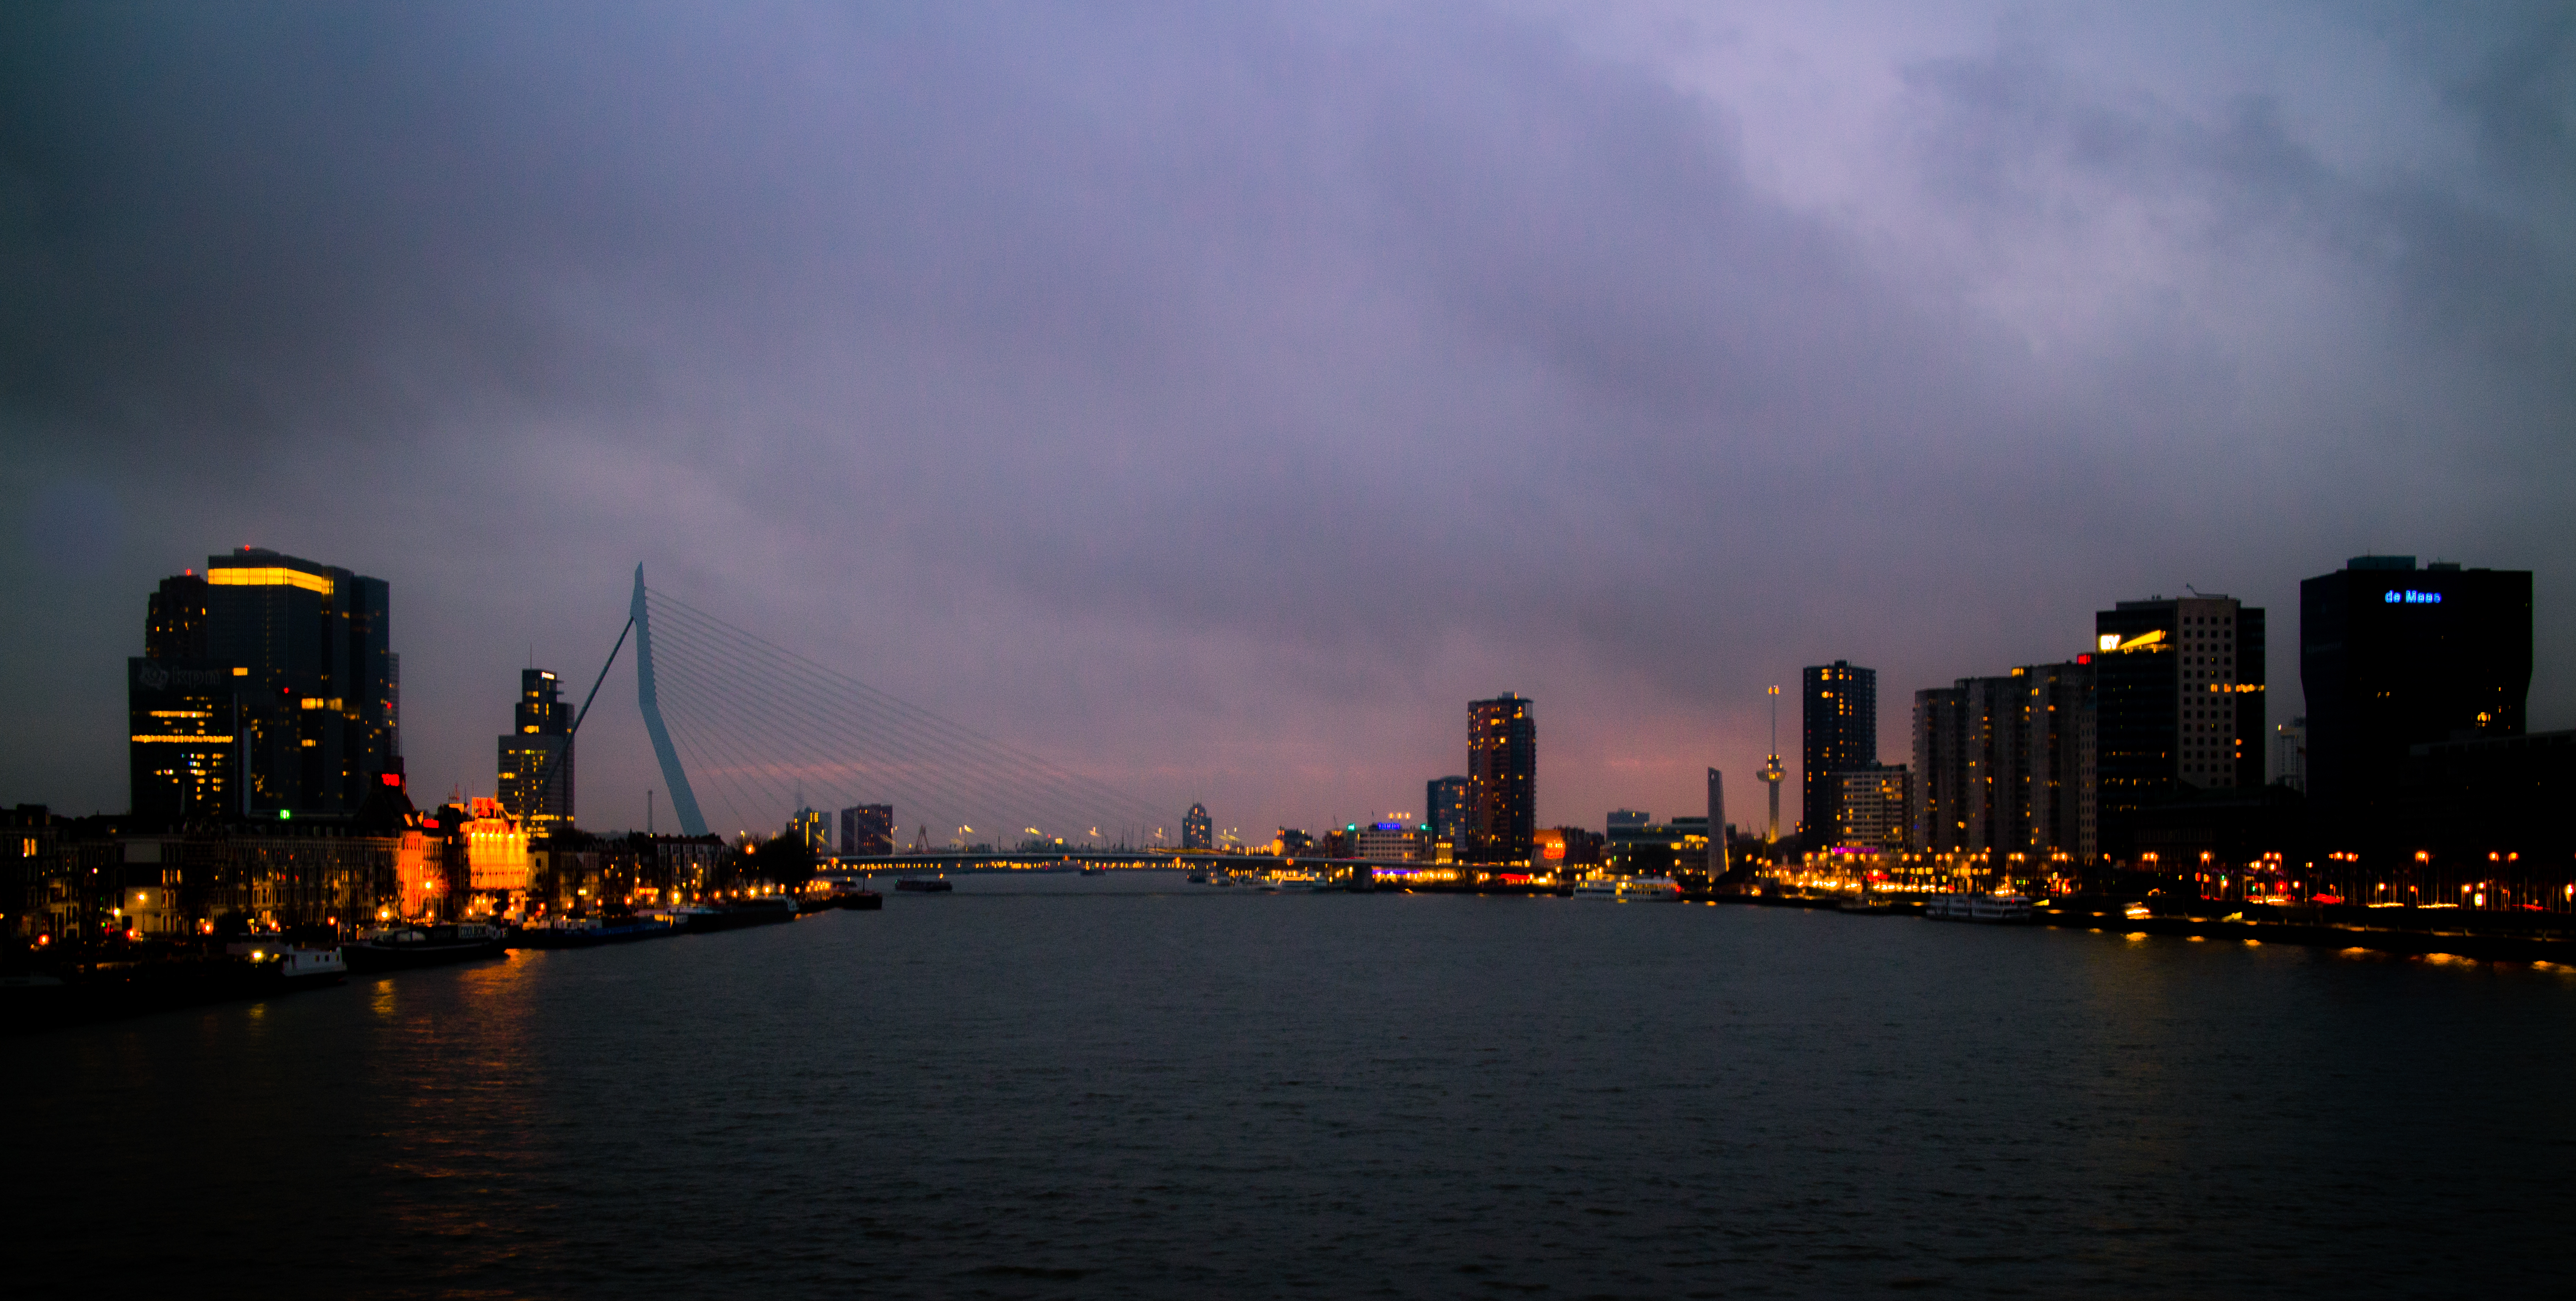 City Lights of Rotterdam, Architecture, Lights, Water, Skyline, HQ Photo